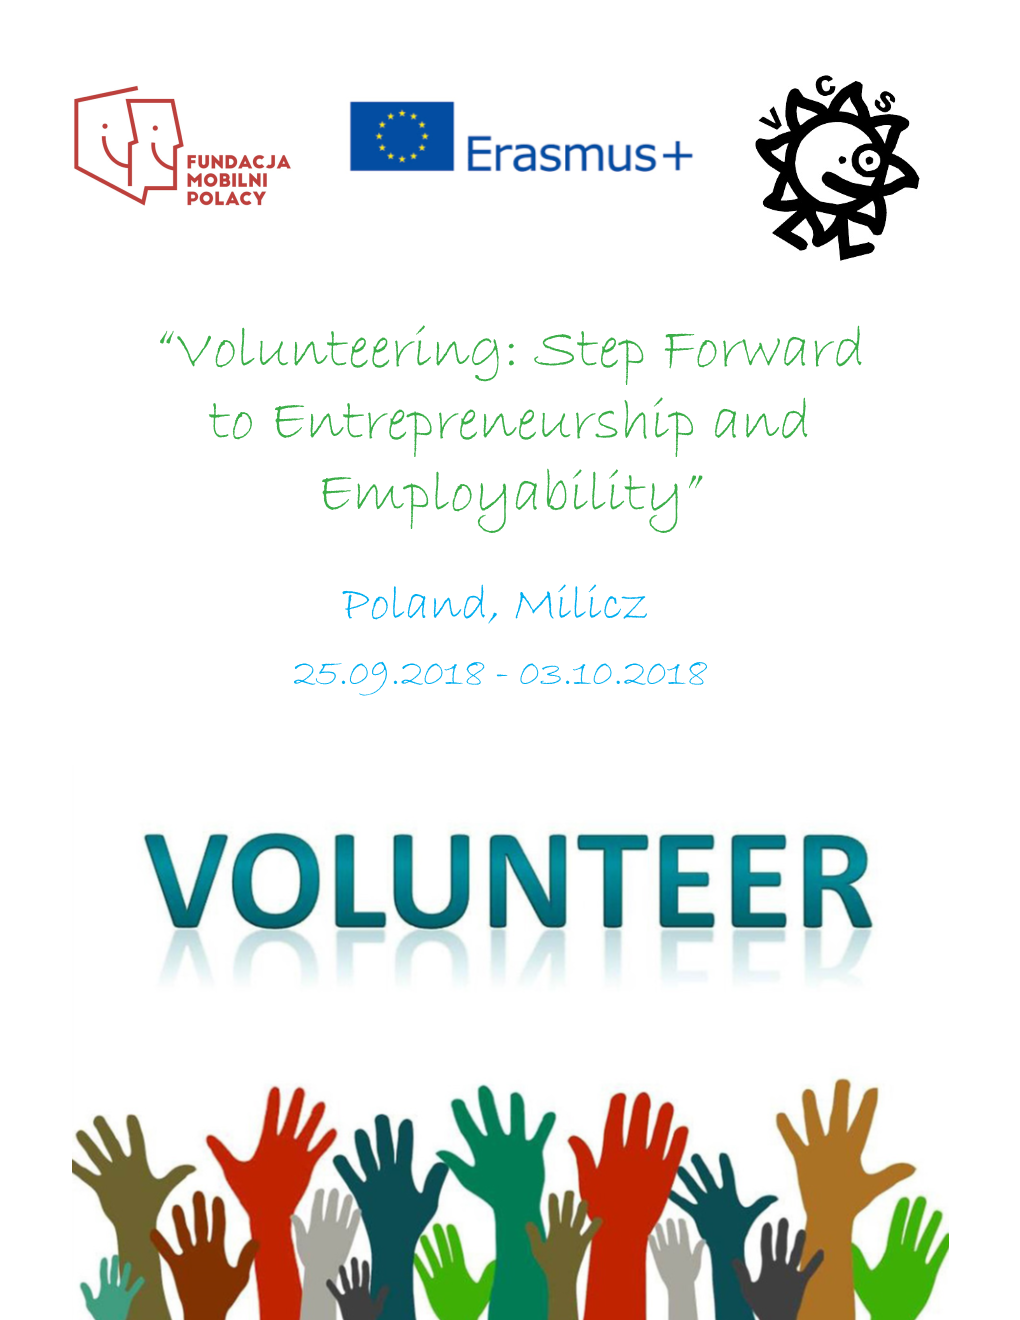 “Volunteering: Step Forward to Entrepreneurship and Employability”